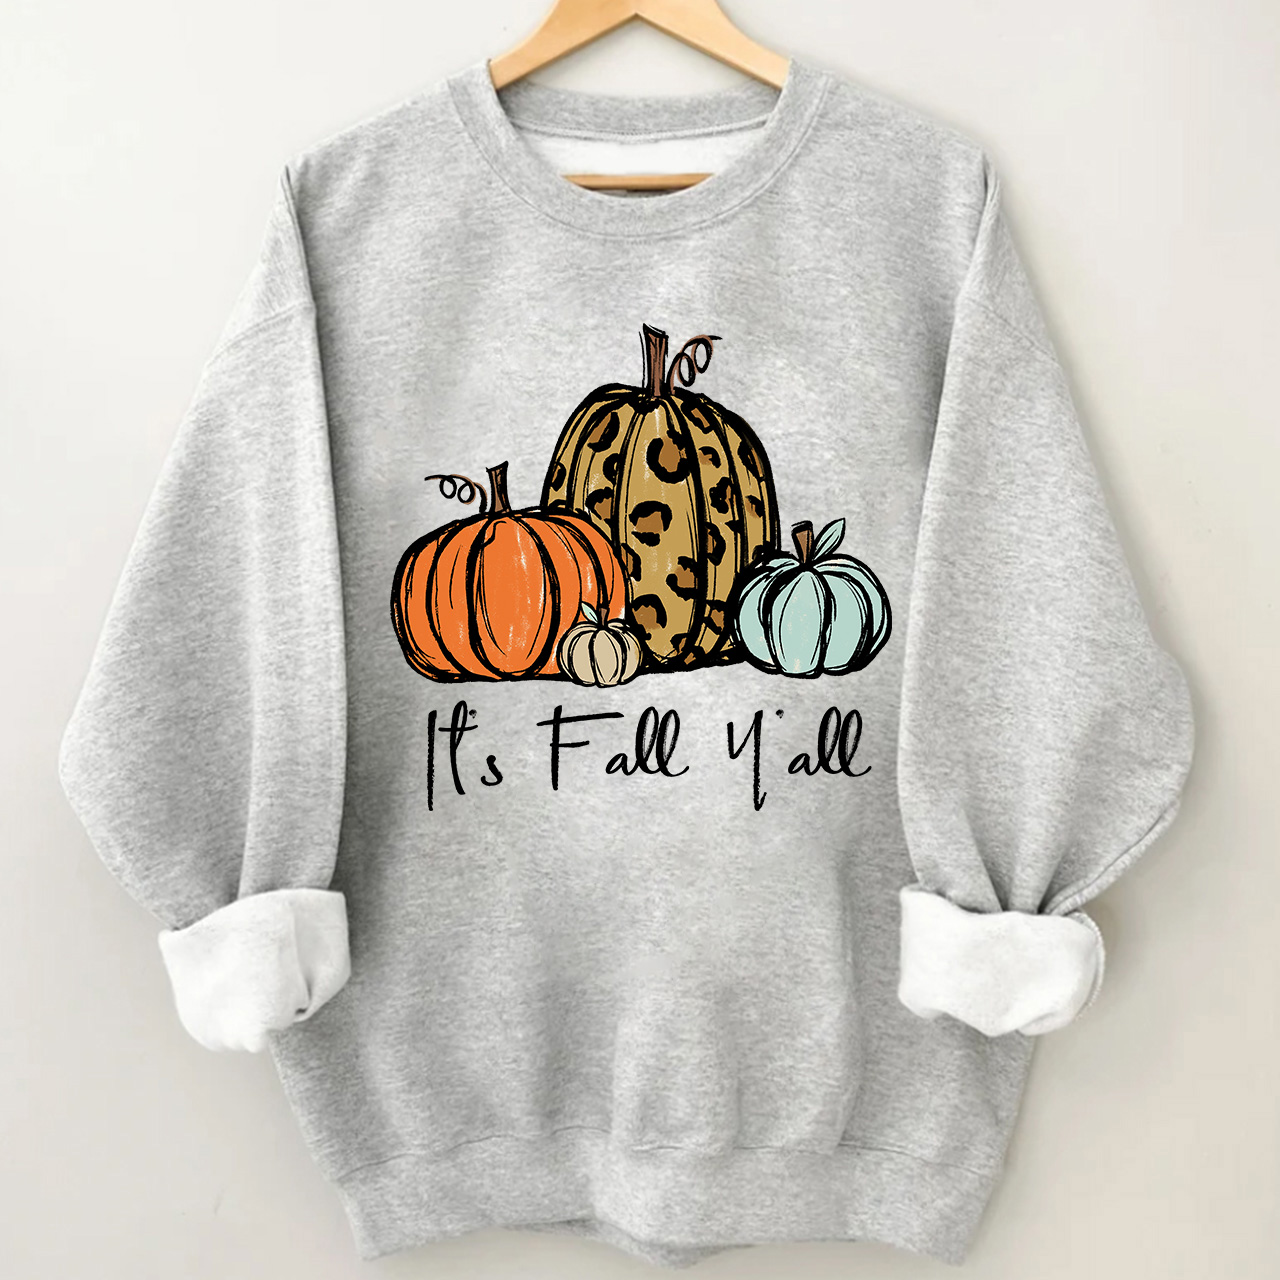 Its Fall Yall - Pumpkin Sweatshirt For Her